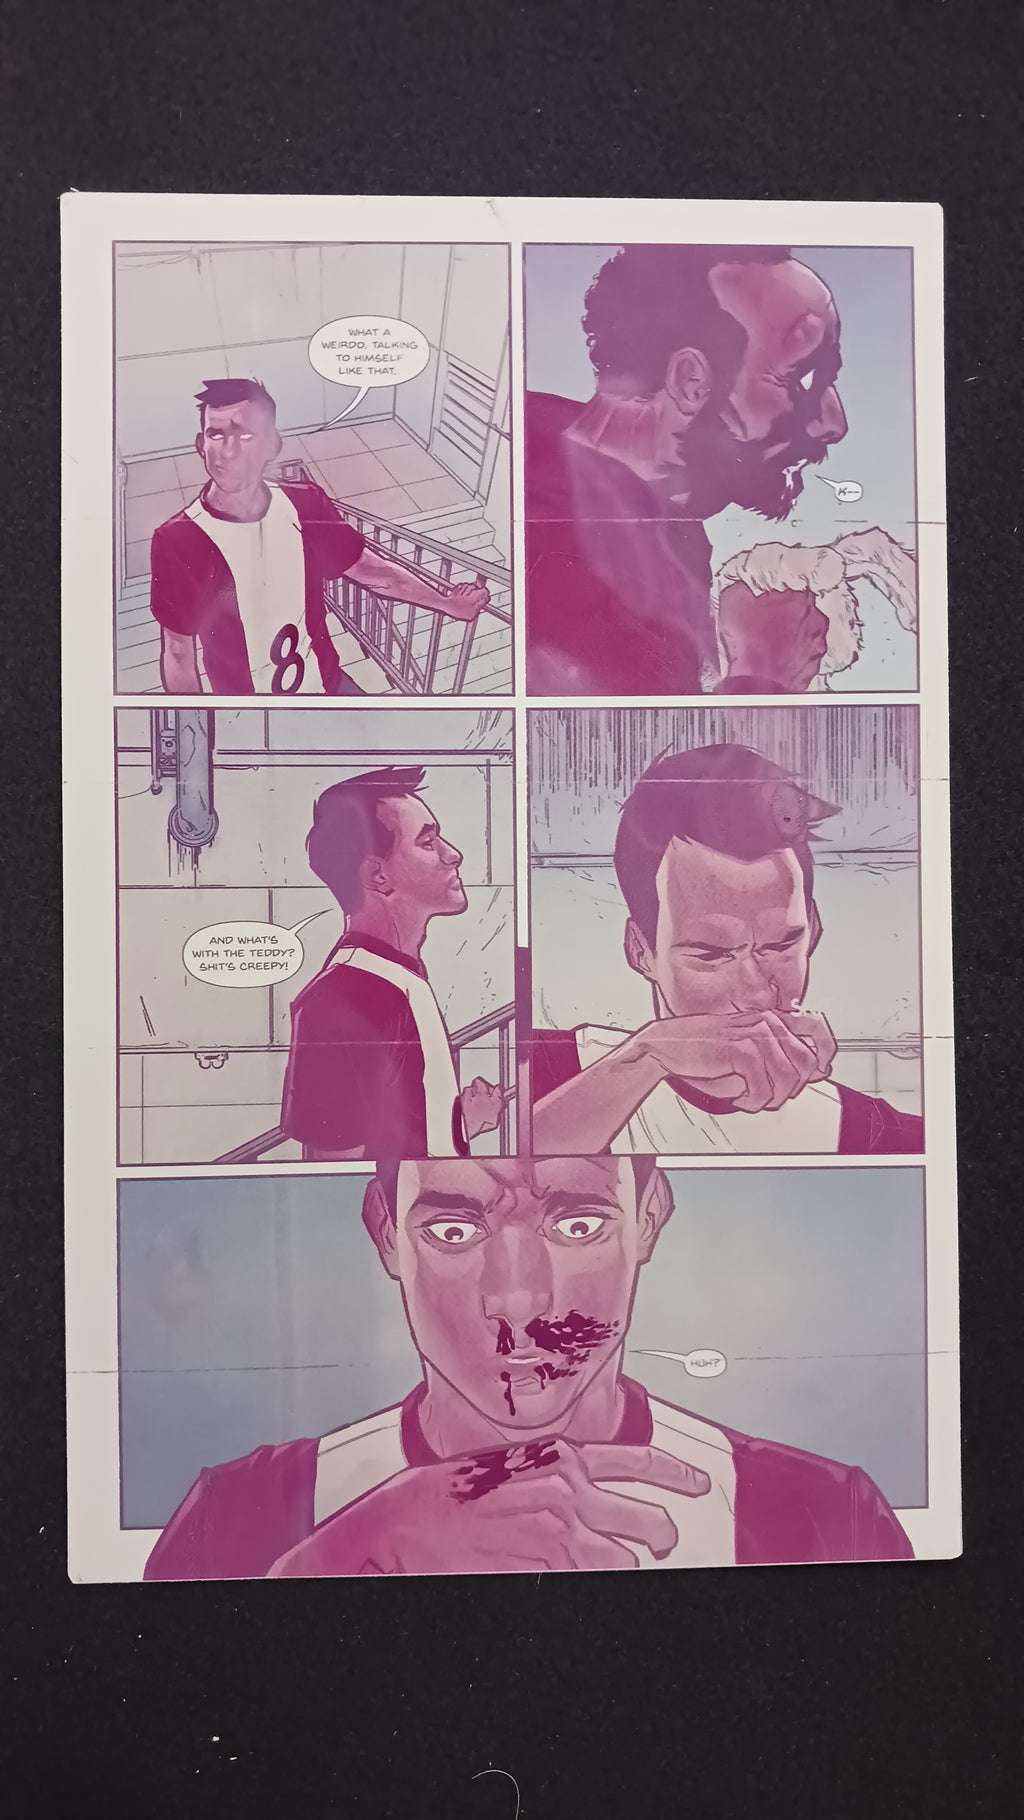 Category Zero Conflict #4 - Page 19 - PRESSWORKS - Comic Art - Printer Plate - Magenta